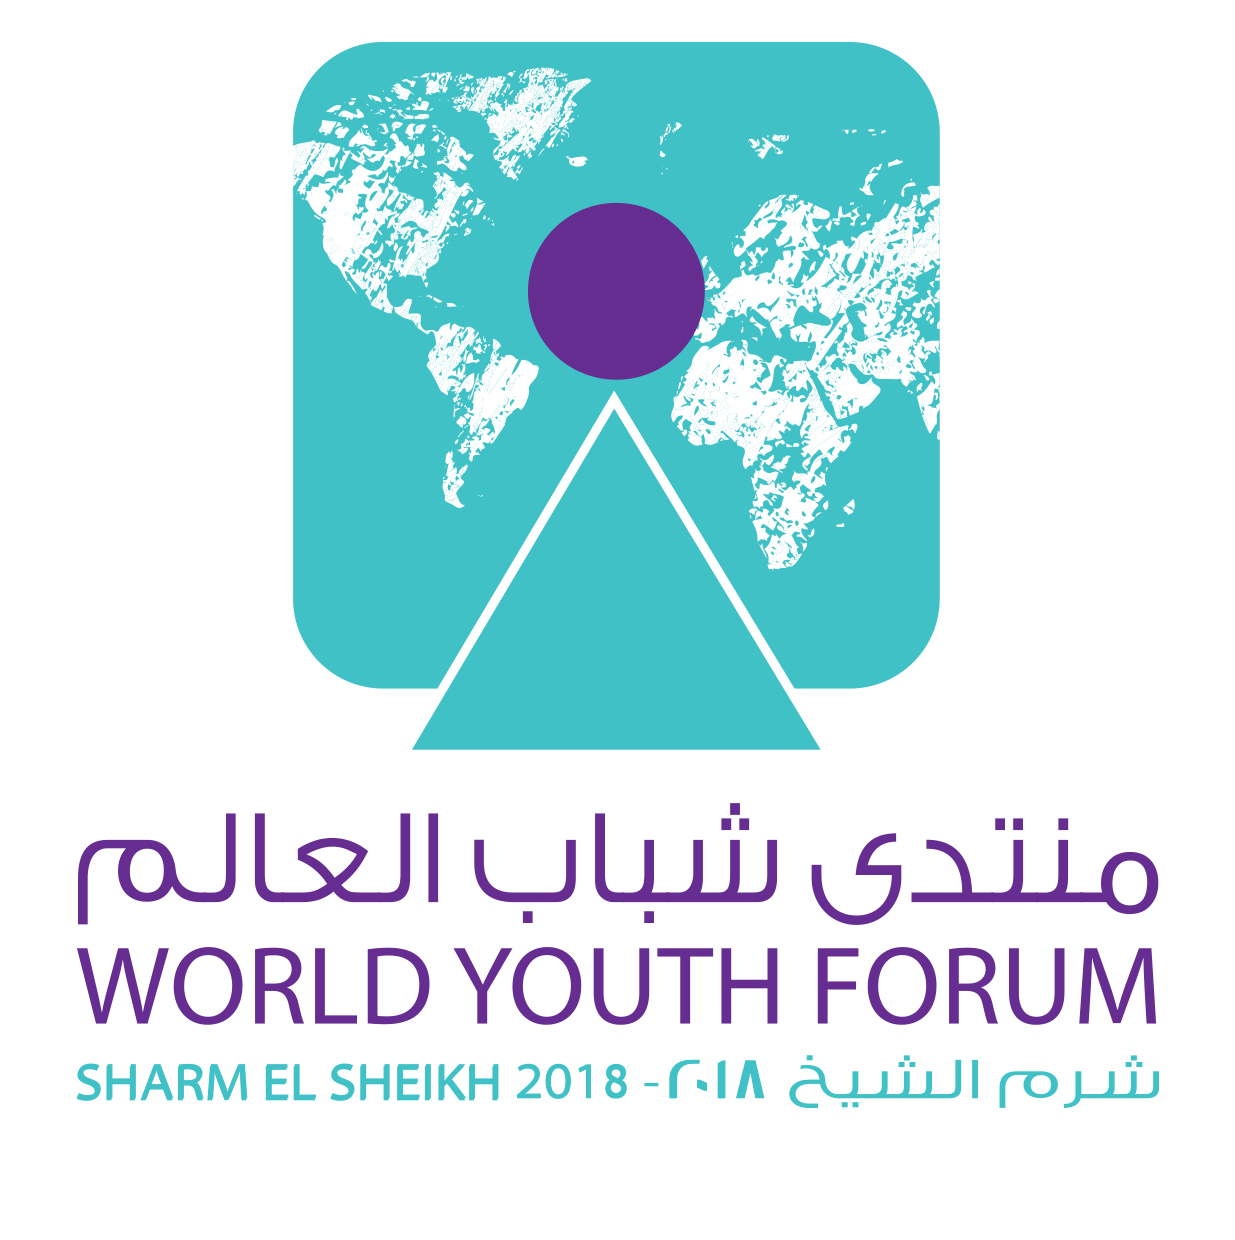 World Youth Forum 2018